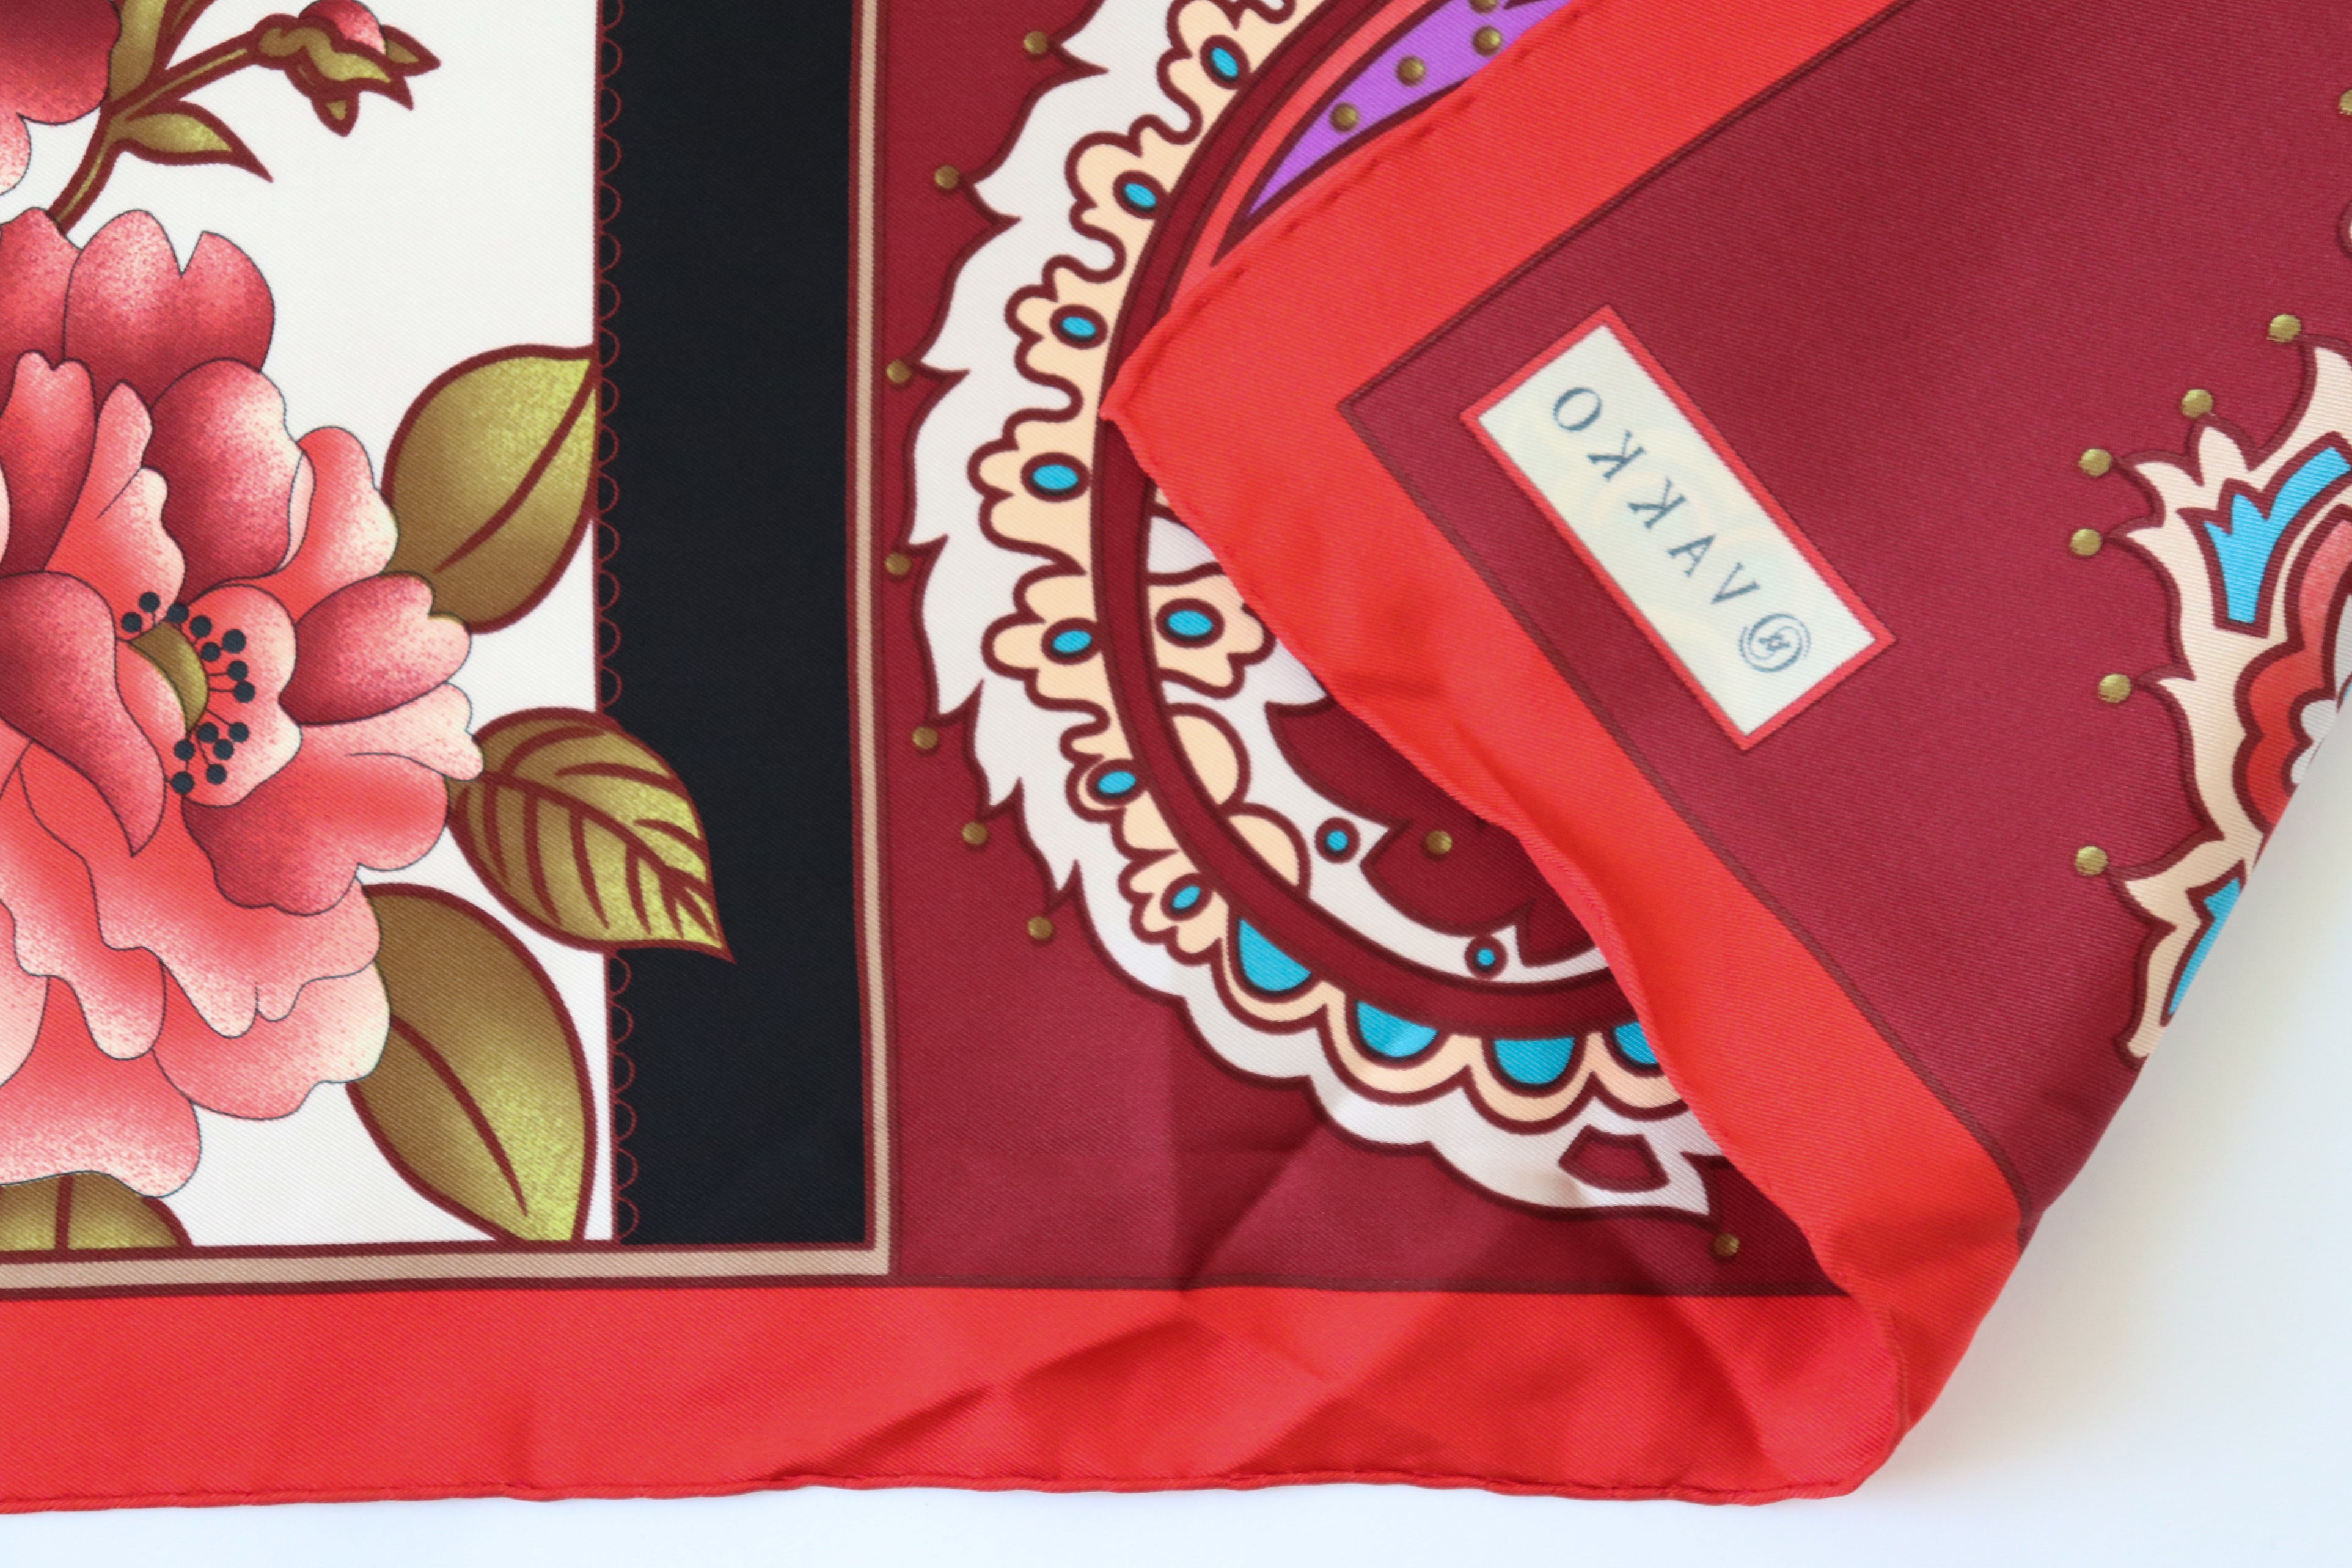 Vakko Silk Scarf - Red Floral / Paisley Peasant Print - 90 x 90 - LARGE